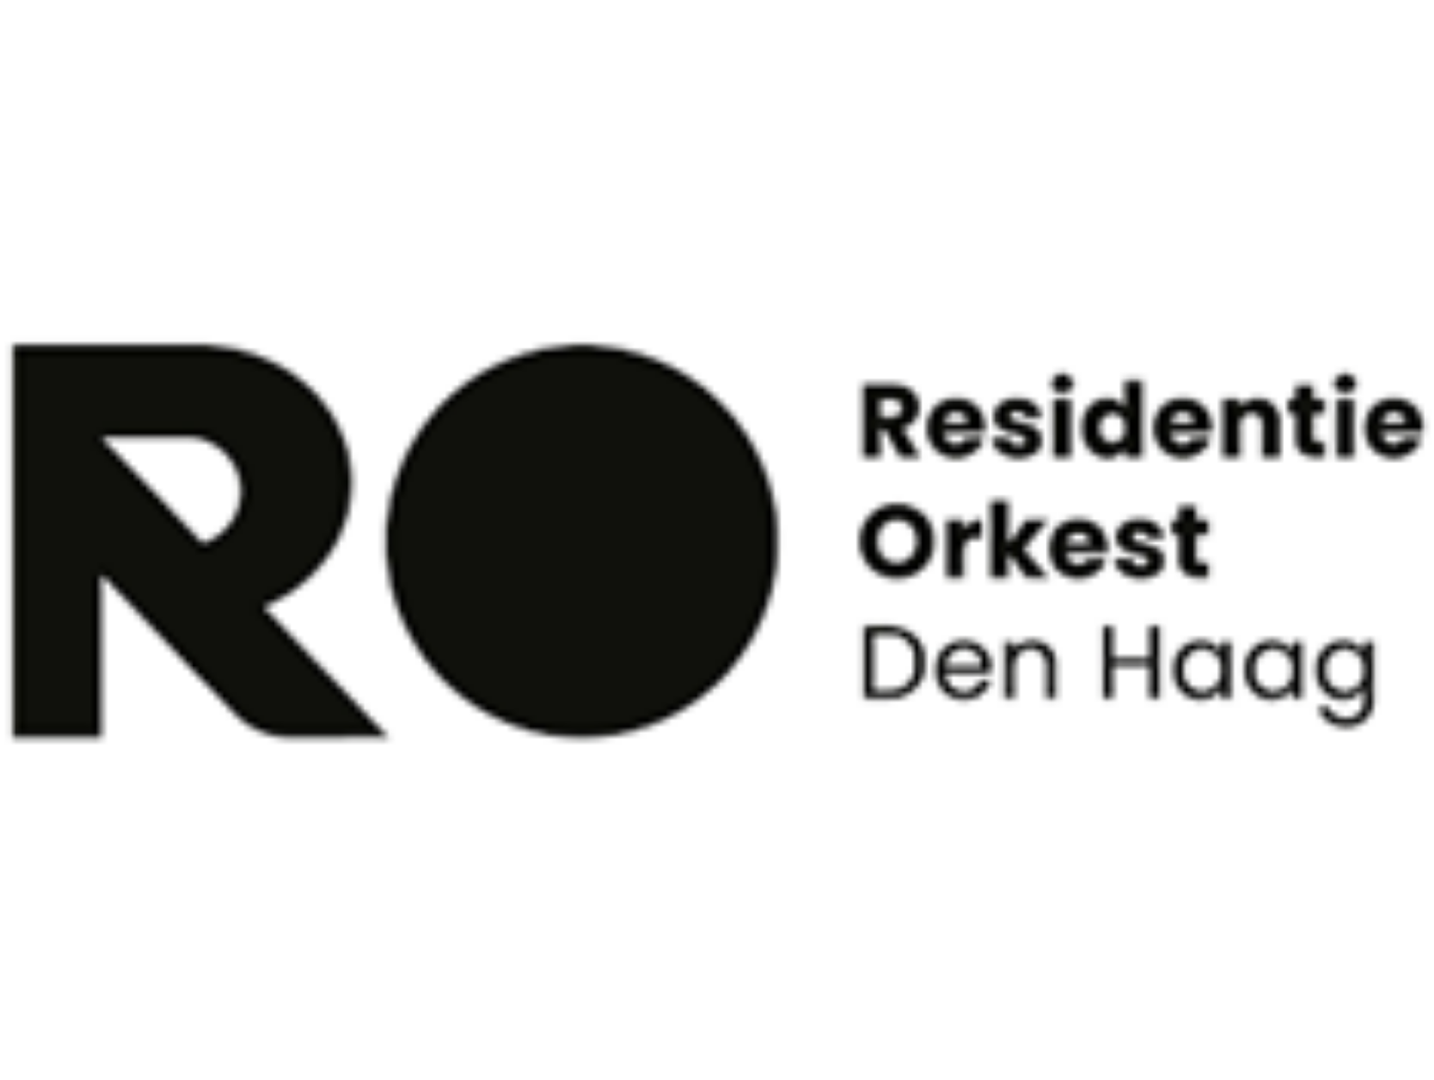 Residentie Orkest Den Haag